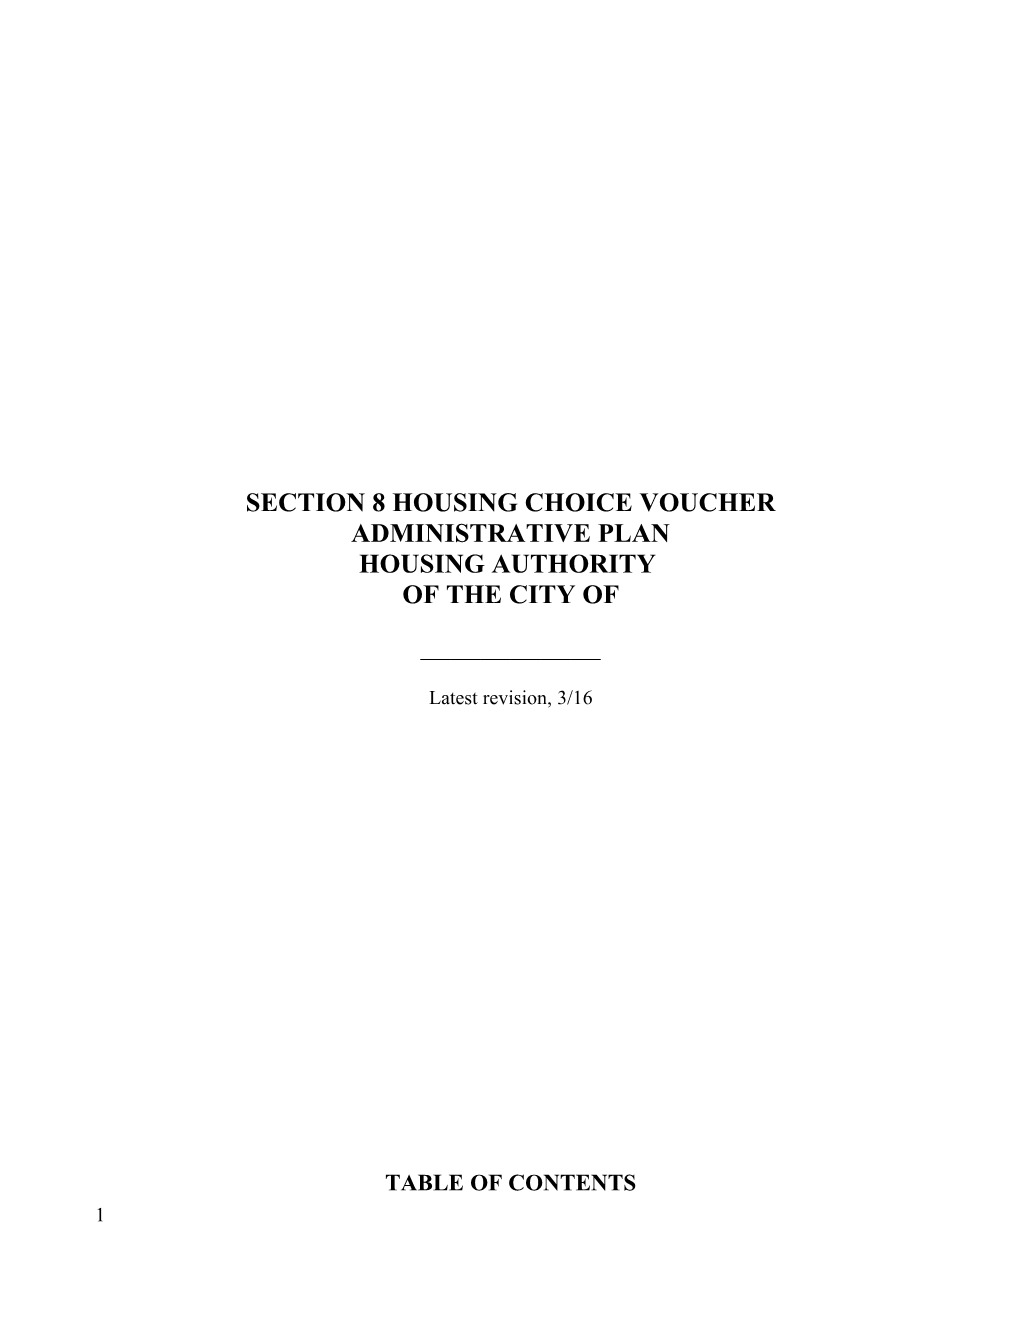 Section 8 Housing Choice Voucher